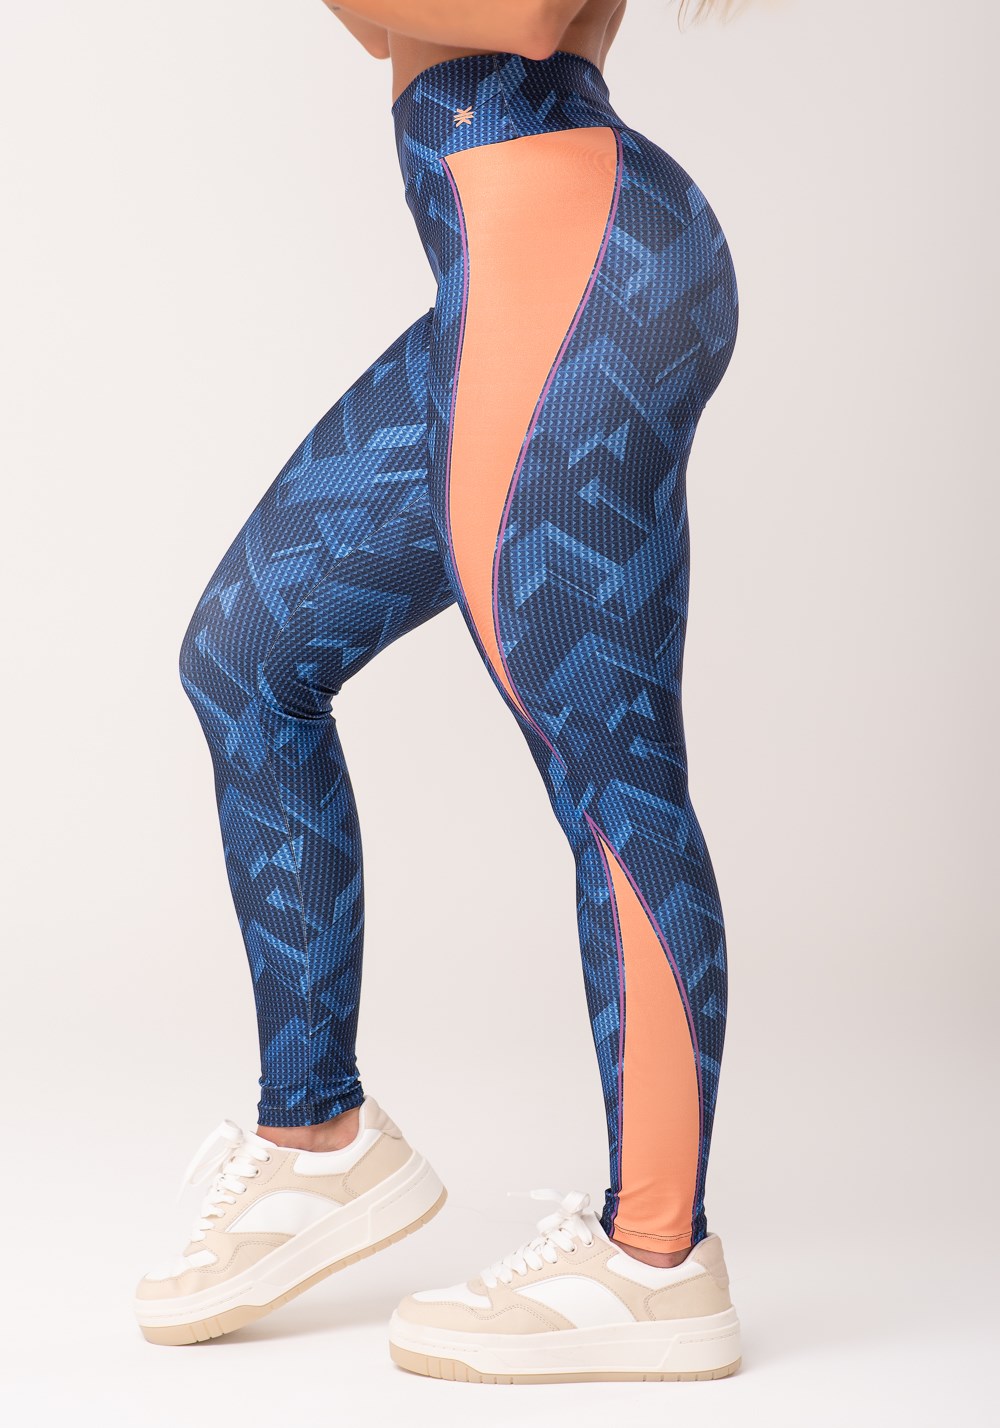 Legging fitness feminina estampada brave azul printed